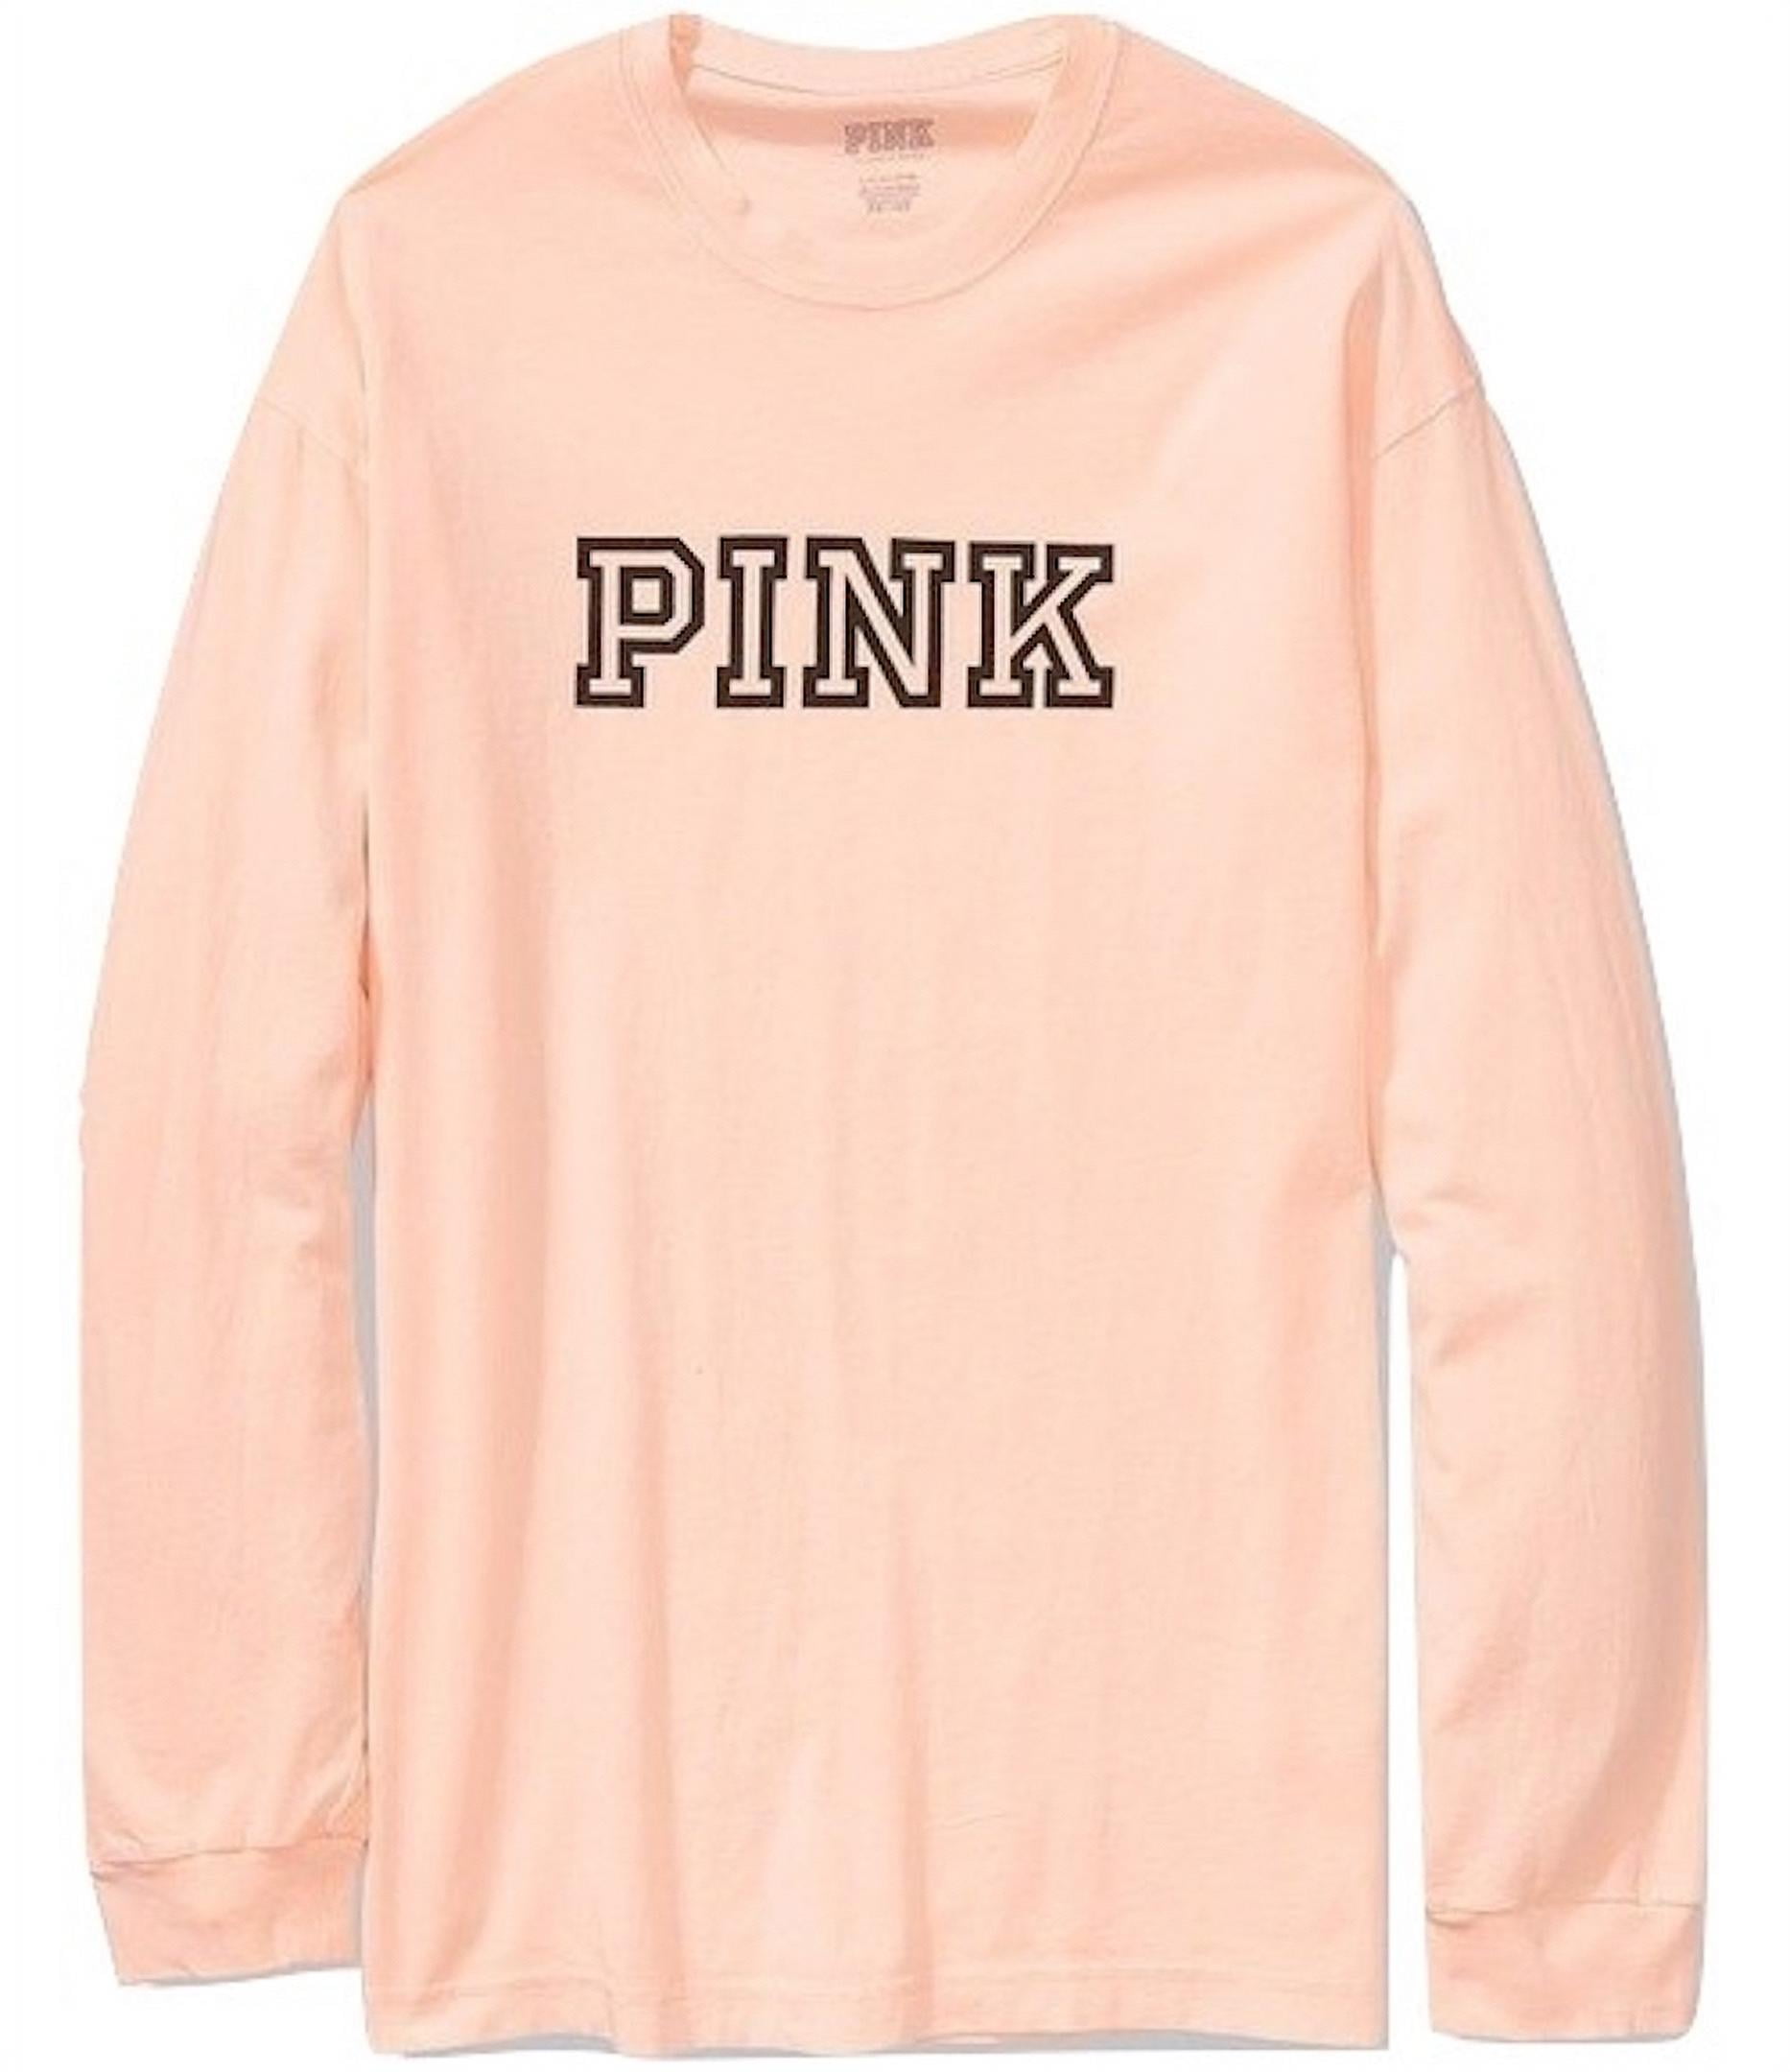 Victoria Secret Pink Bling Shirt